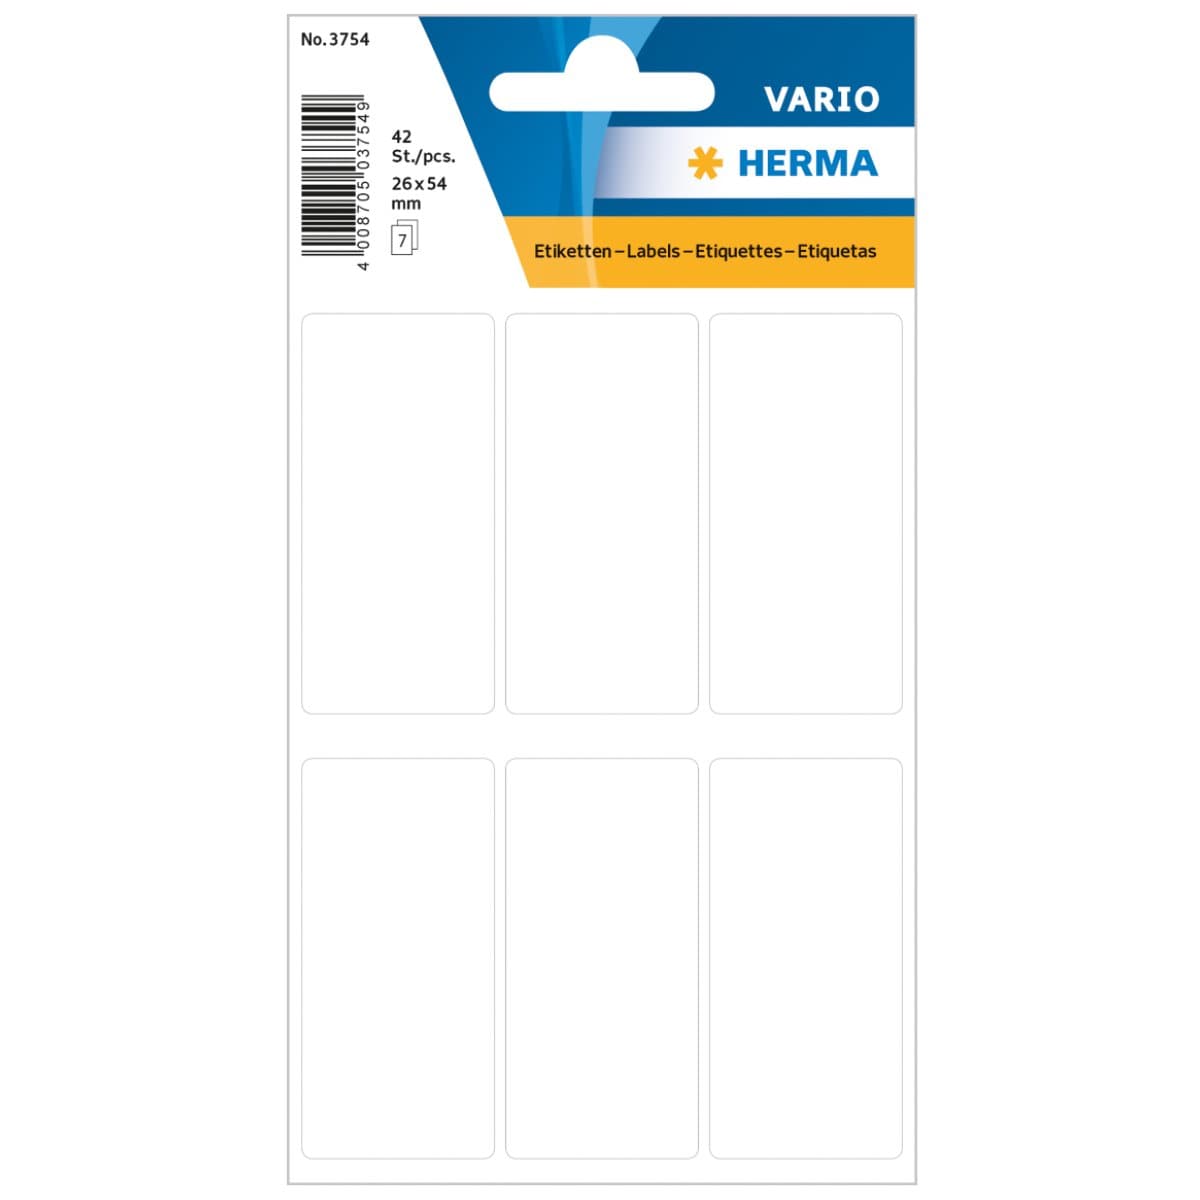 Herma Vario Sticker Labels, 26 x 54 mm, 42/pack, White